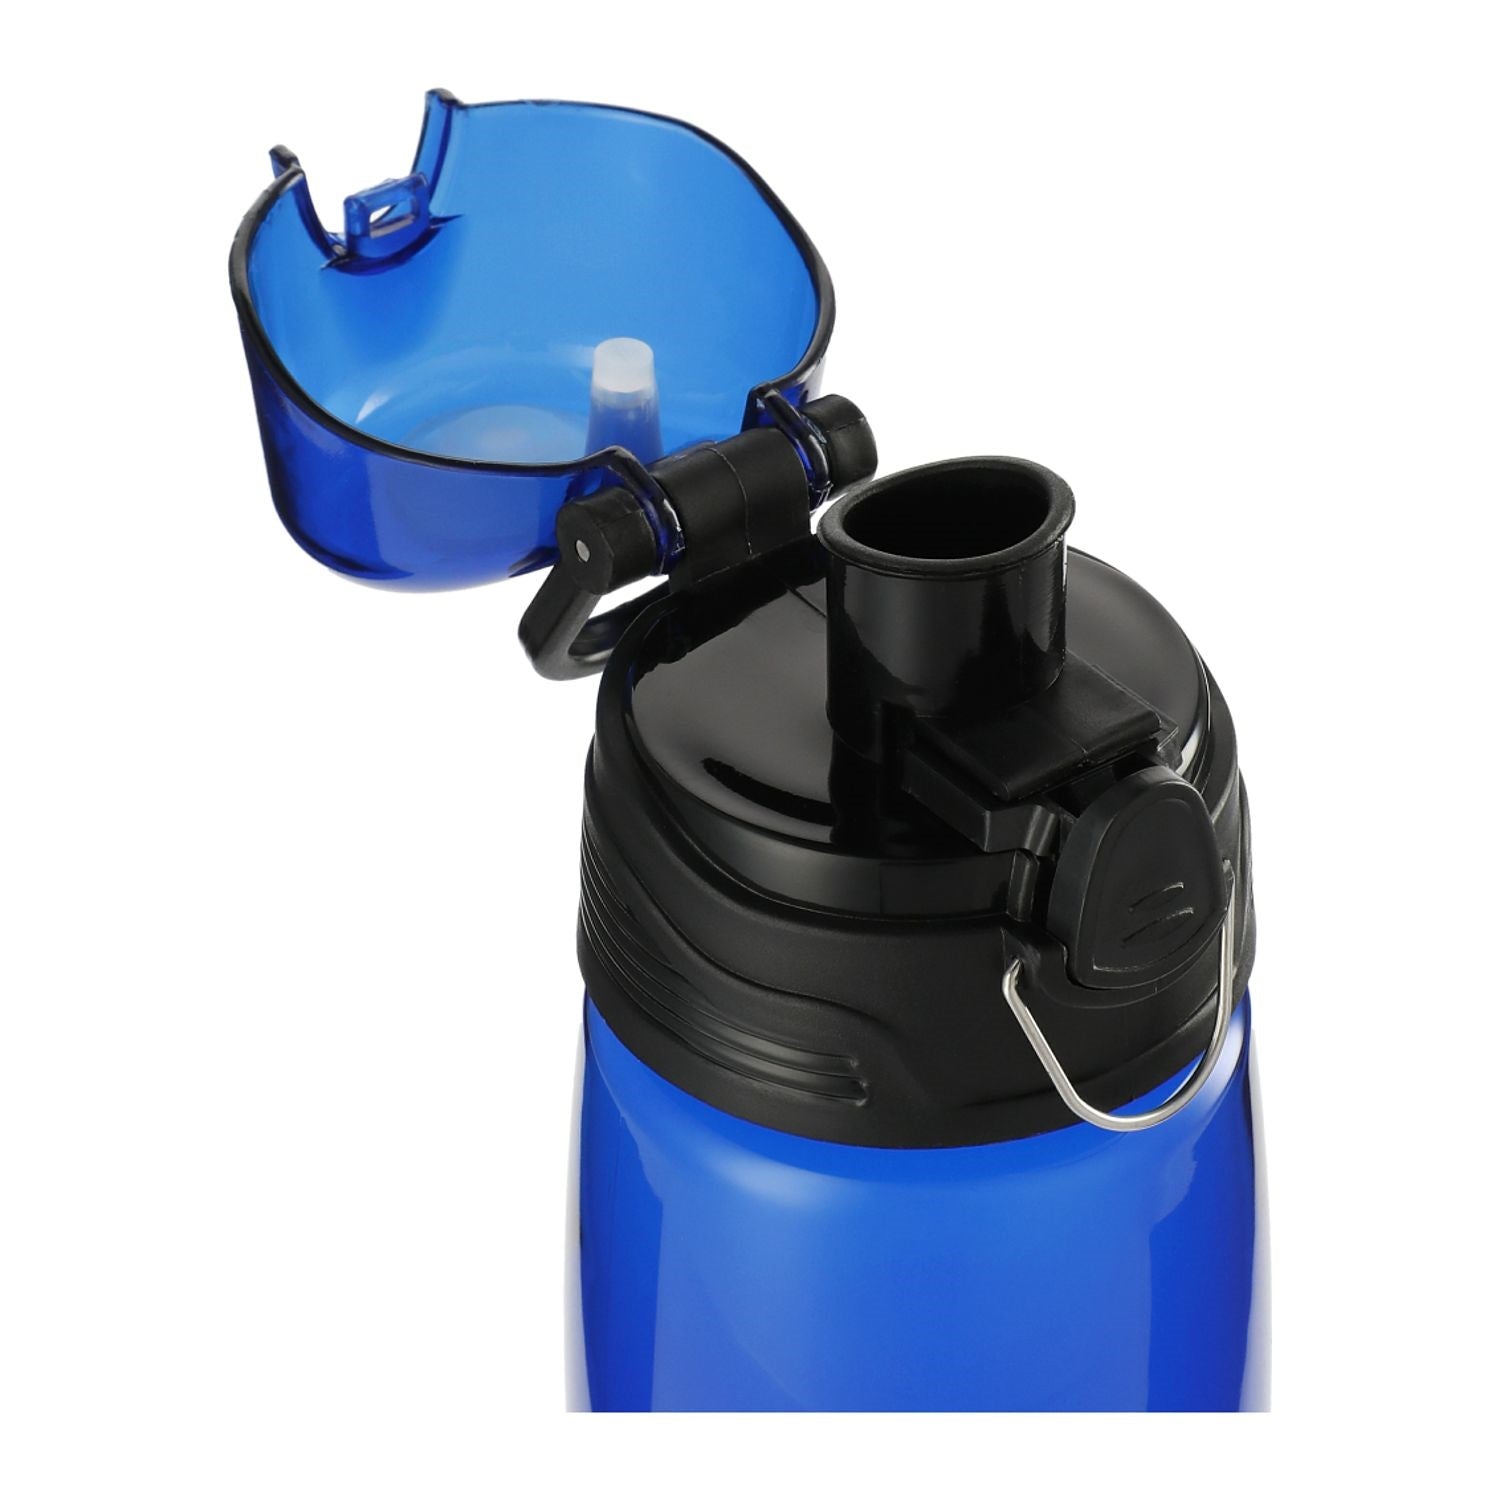 Water bottle, MCASOM and MCGSBS – Mayo Clinic Alumni Association